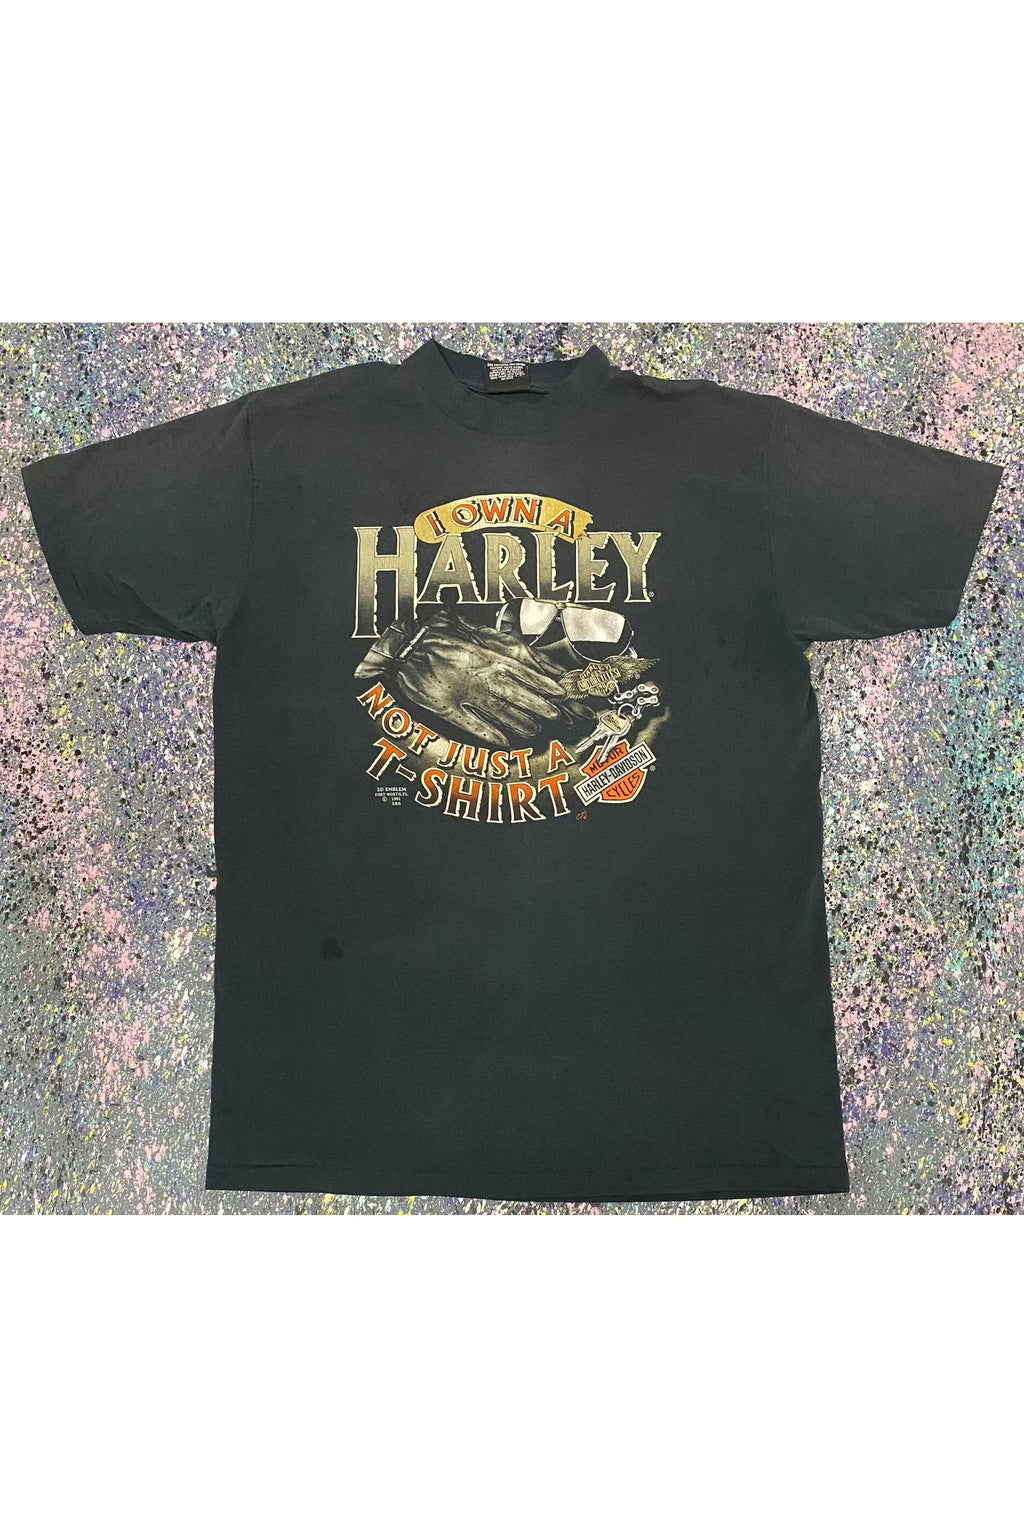 Vintage 1991 I Own A Harley Not Just A T-Shirt 3D Emblem Harley-Davidson Tee- XL